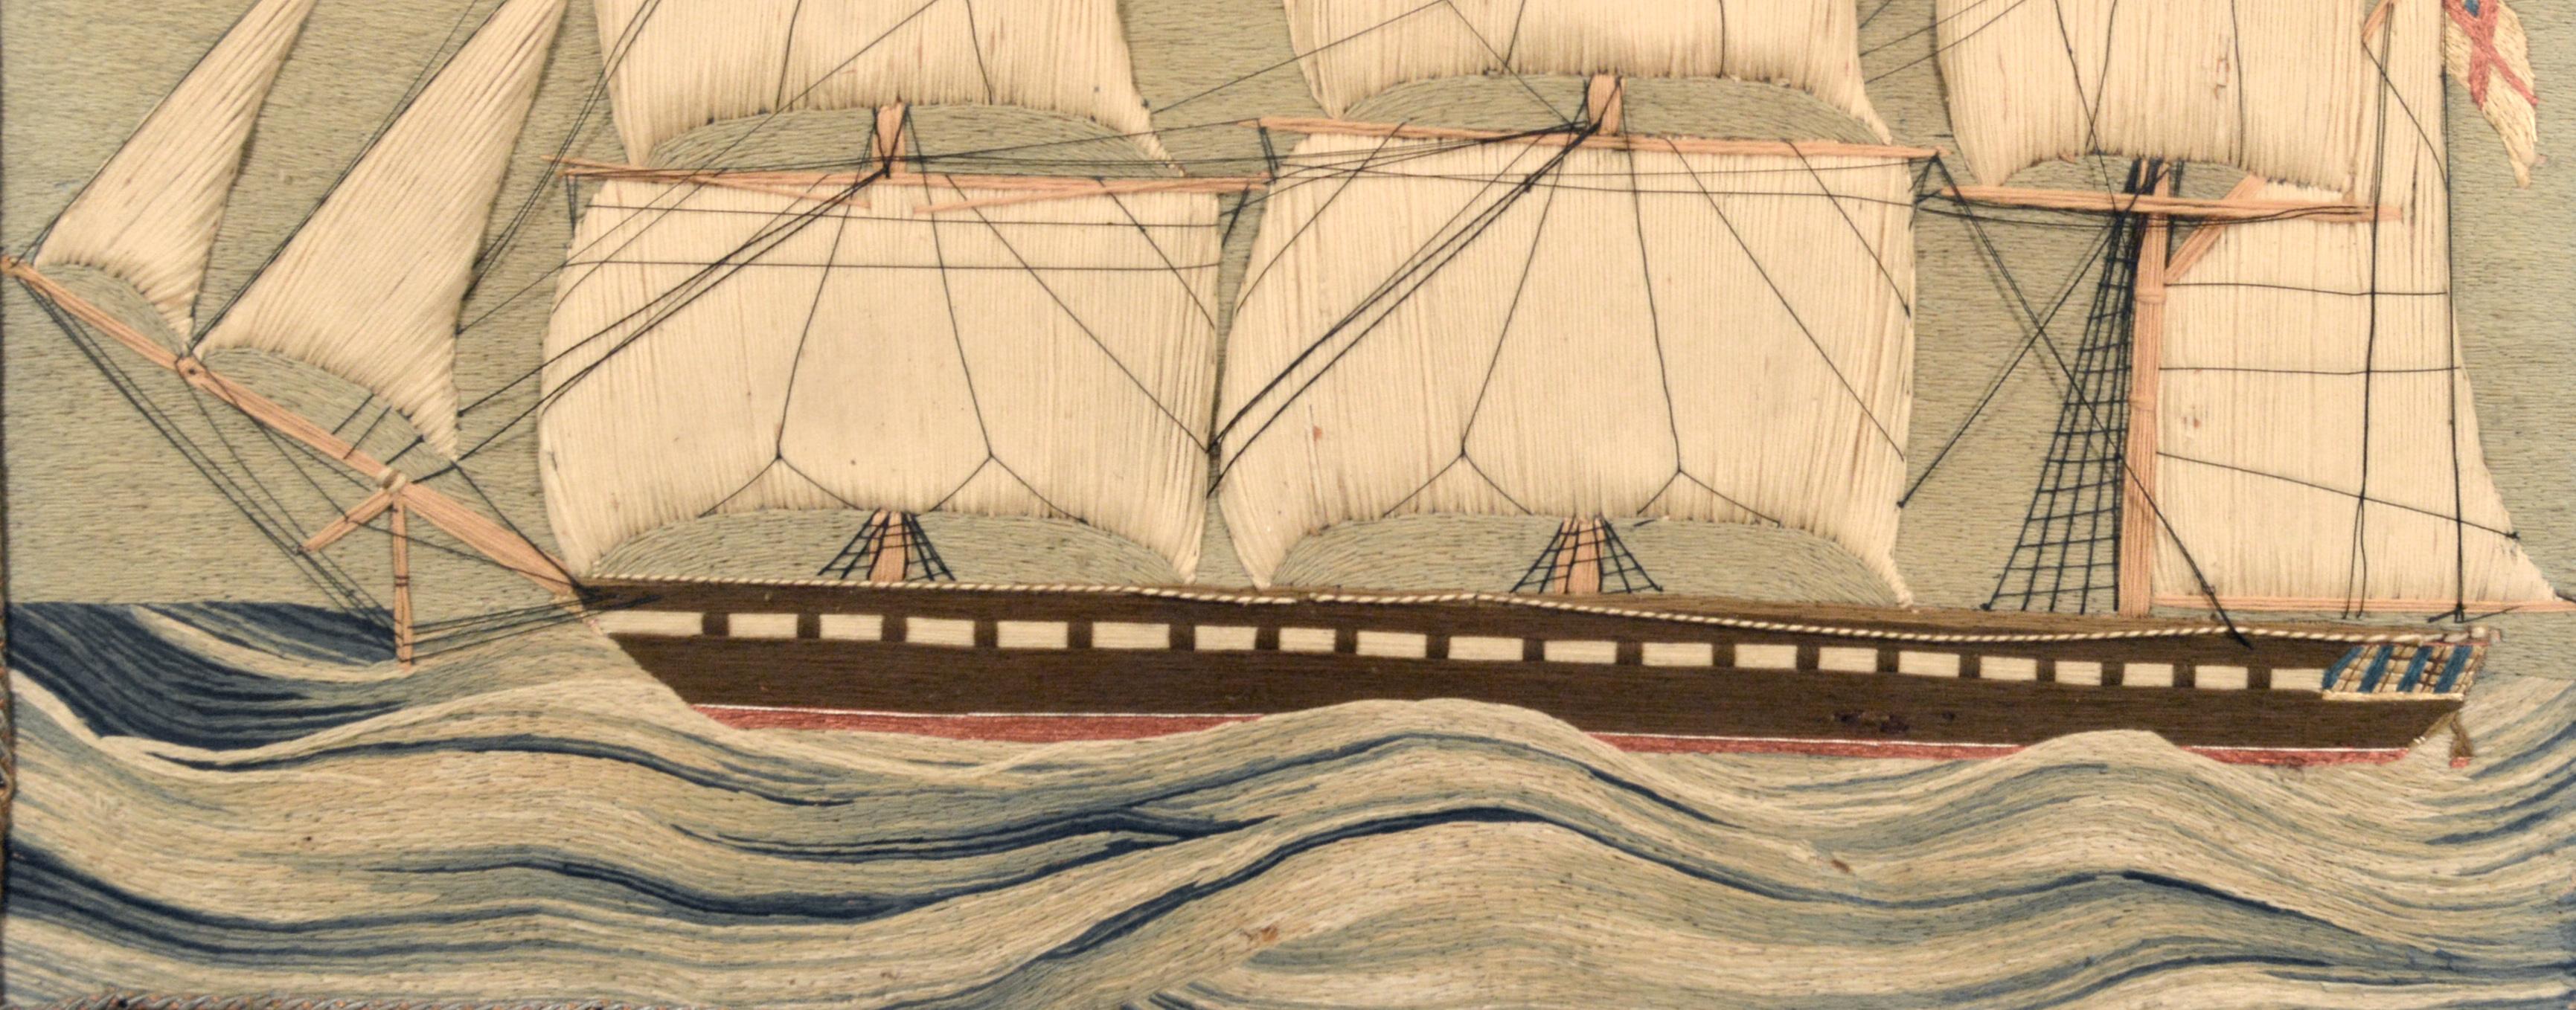 Folk Art British Sailor's Woolie of a Royal Navy Ship with an Unusual Sea circa 1865-1885